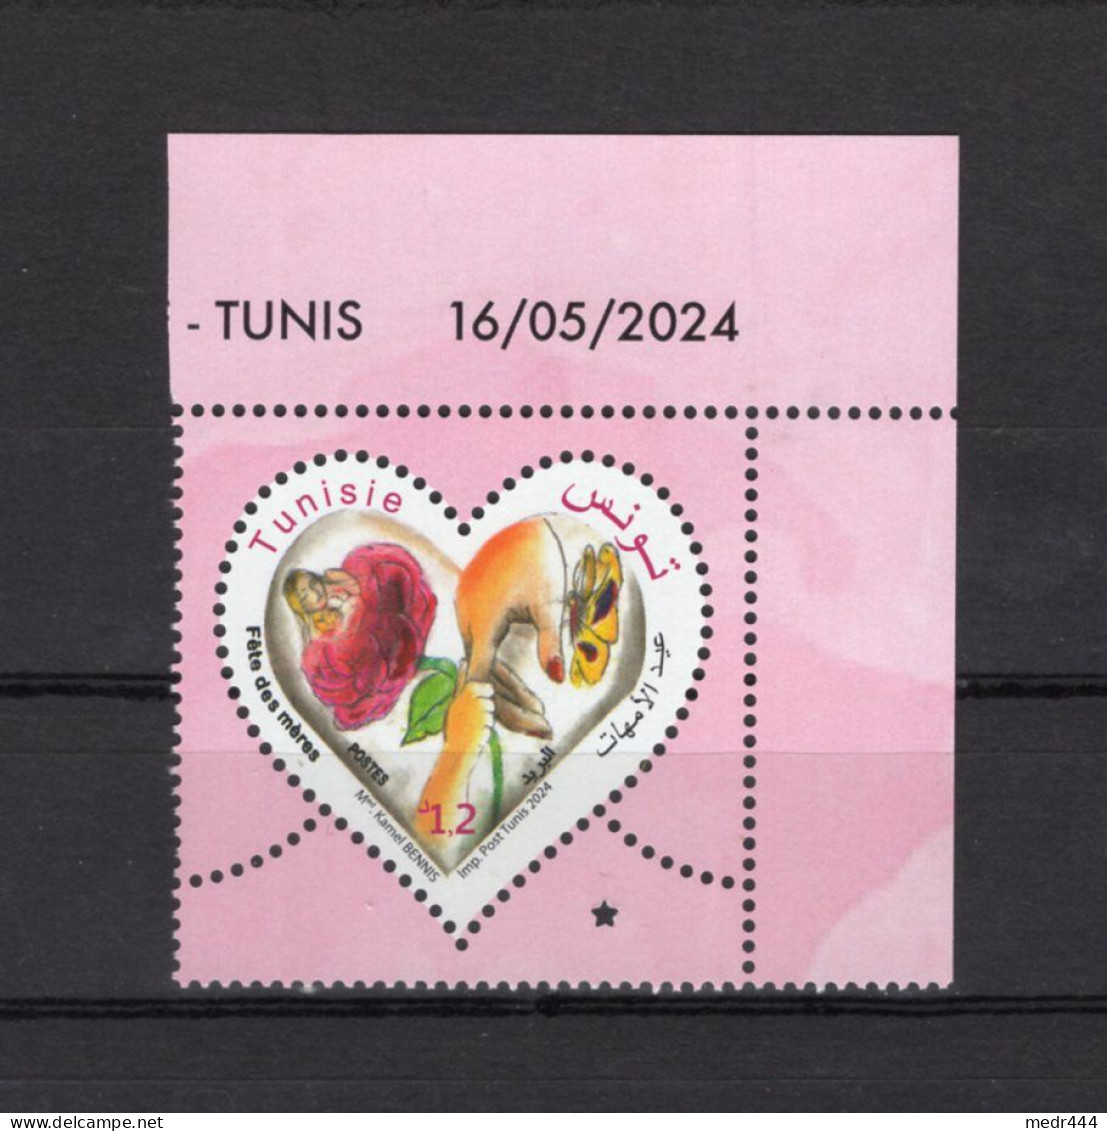 Tunisia/Tunisie 2024 - Mother's Day - Fête Des Mères - Stamp - MNH** - Excellent Quality - Superb*** - Tunisia